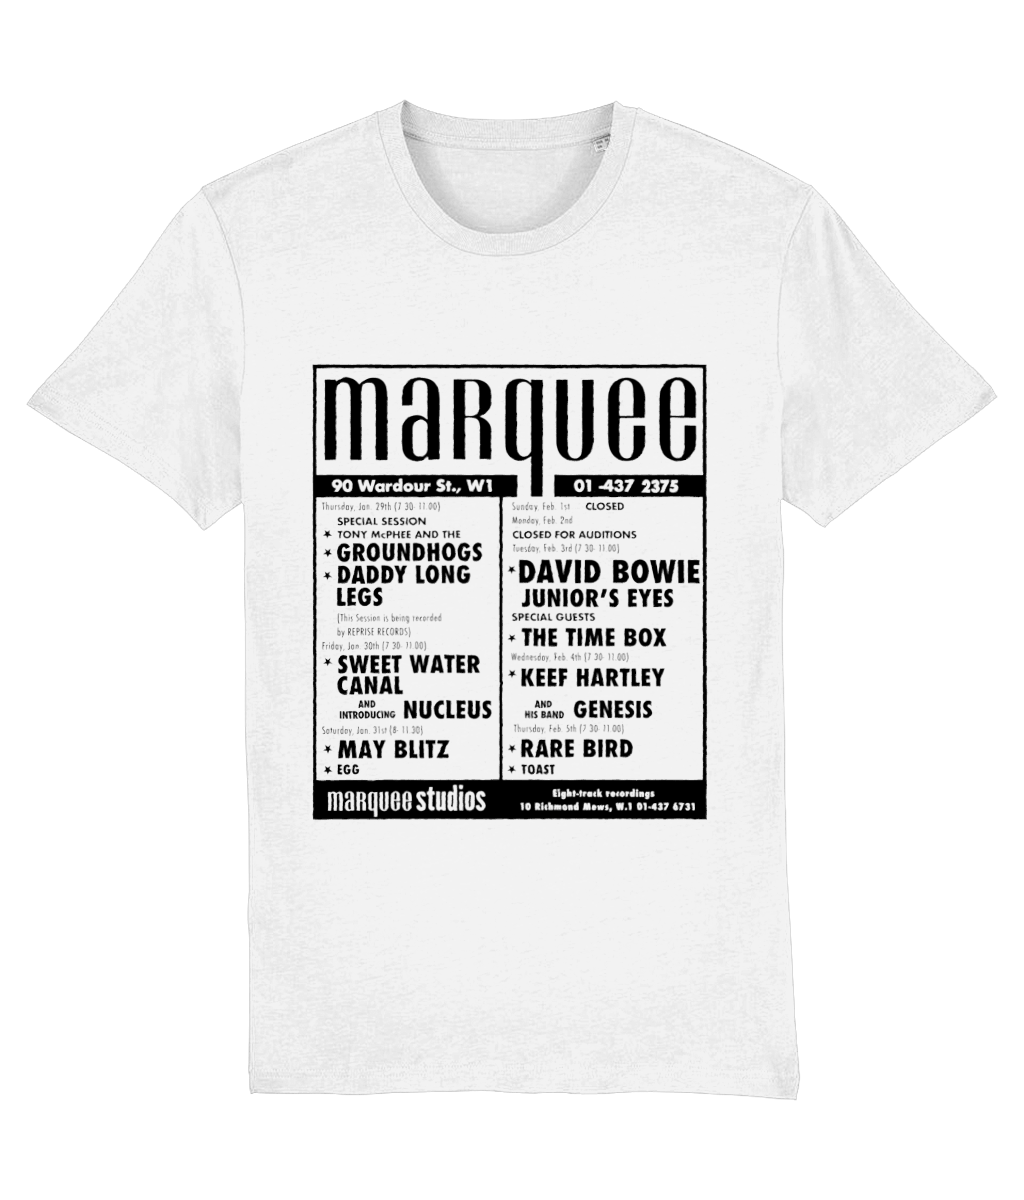 David Bowie T-shirt